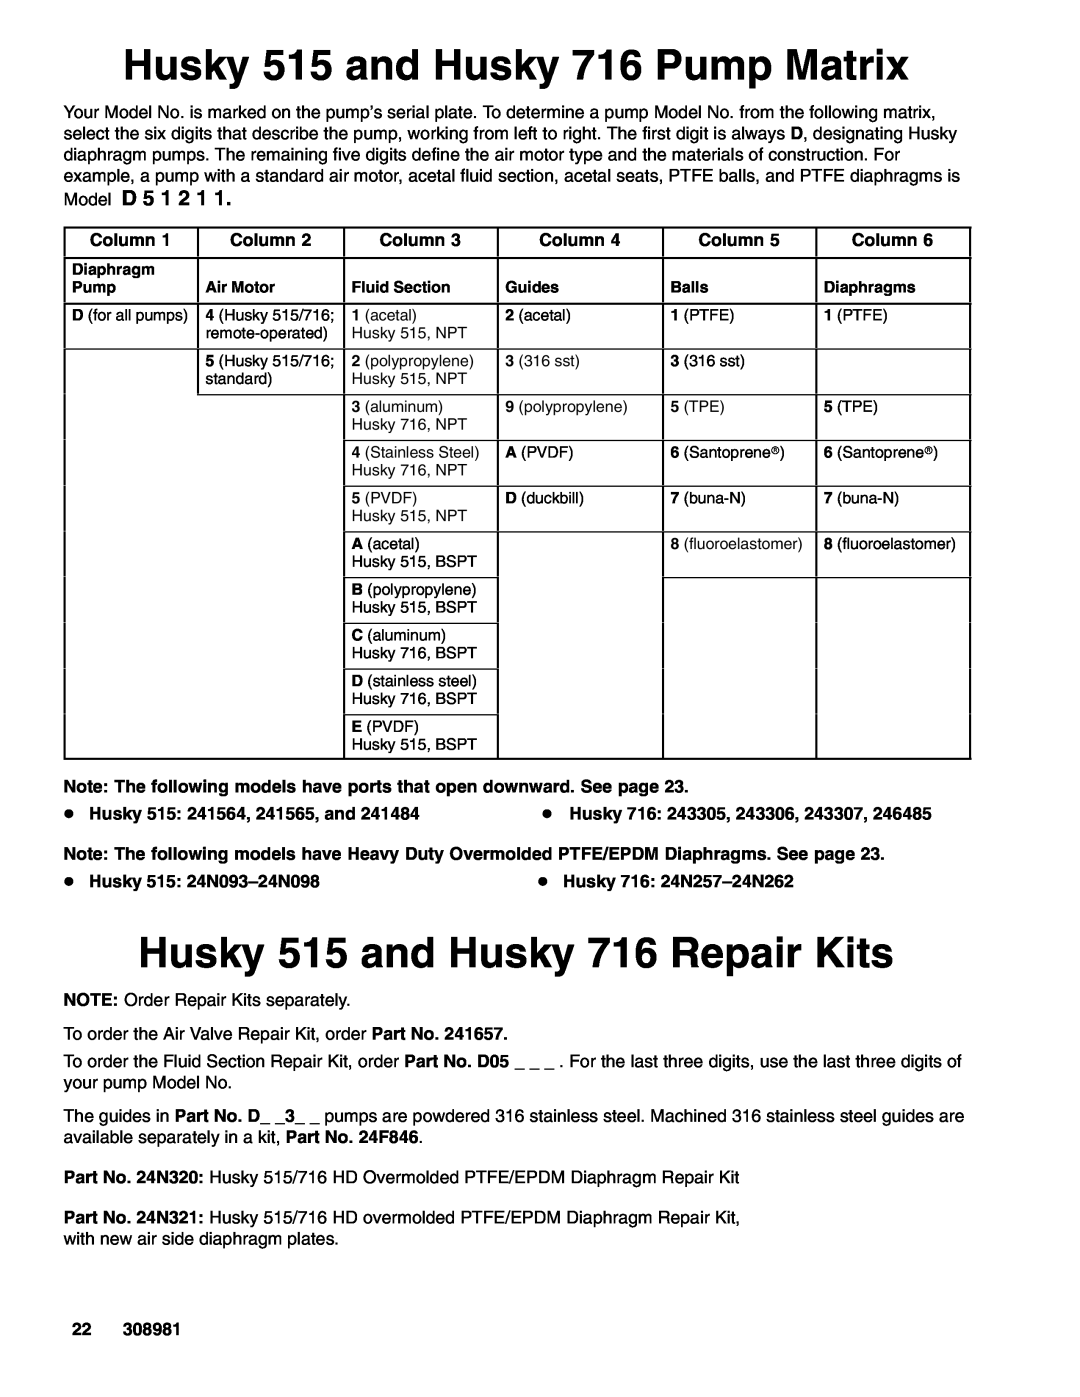 Graco Inc D 5 E, D 5 D Husky 515 and Husky 716 Pump Matrix, Husky 515 and Husky 716 Repair Kits, Model D 5 1 2 1, Column 